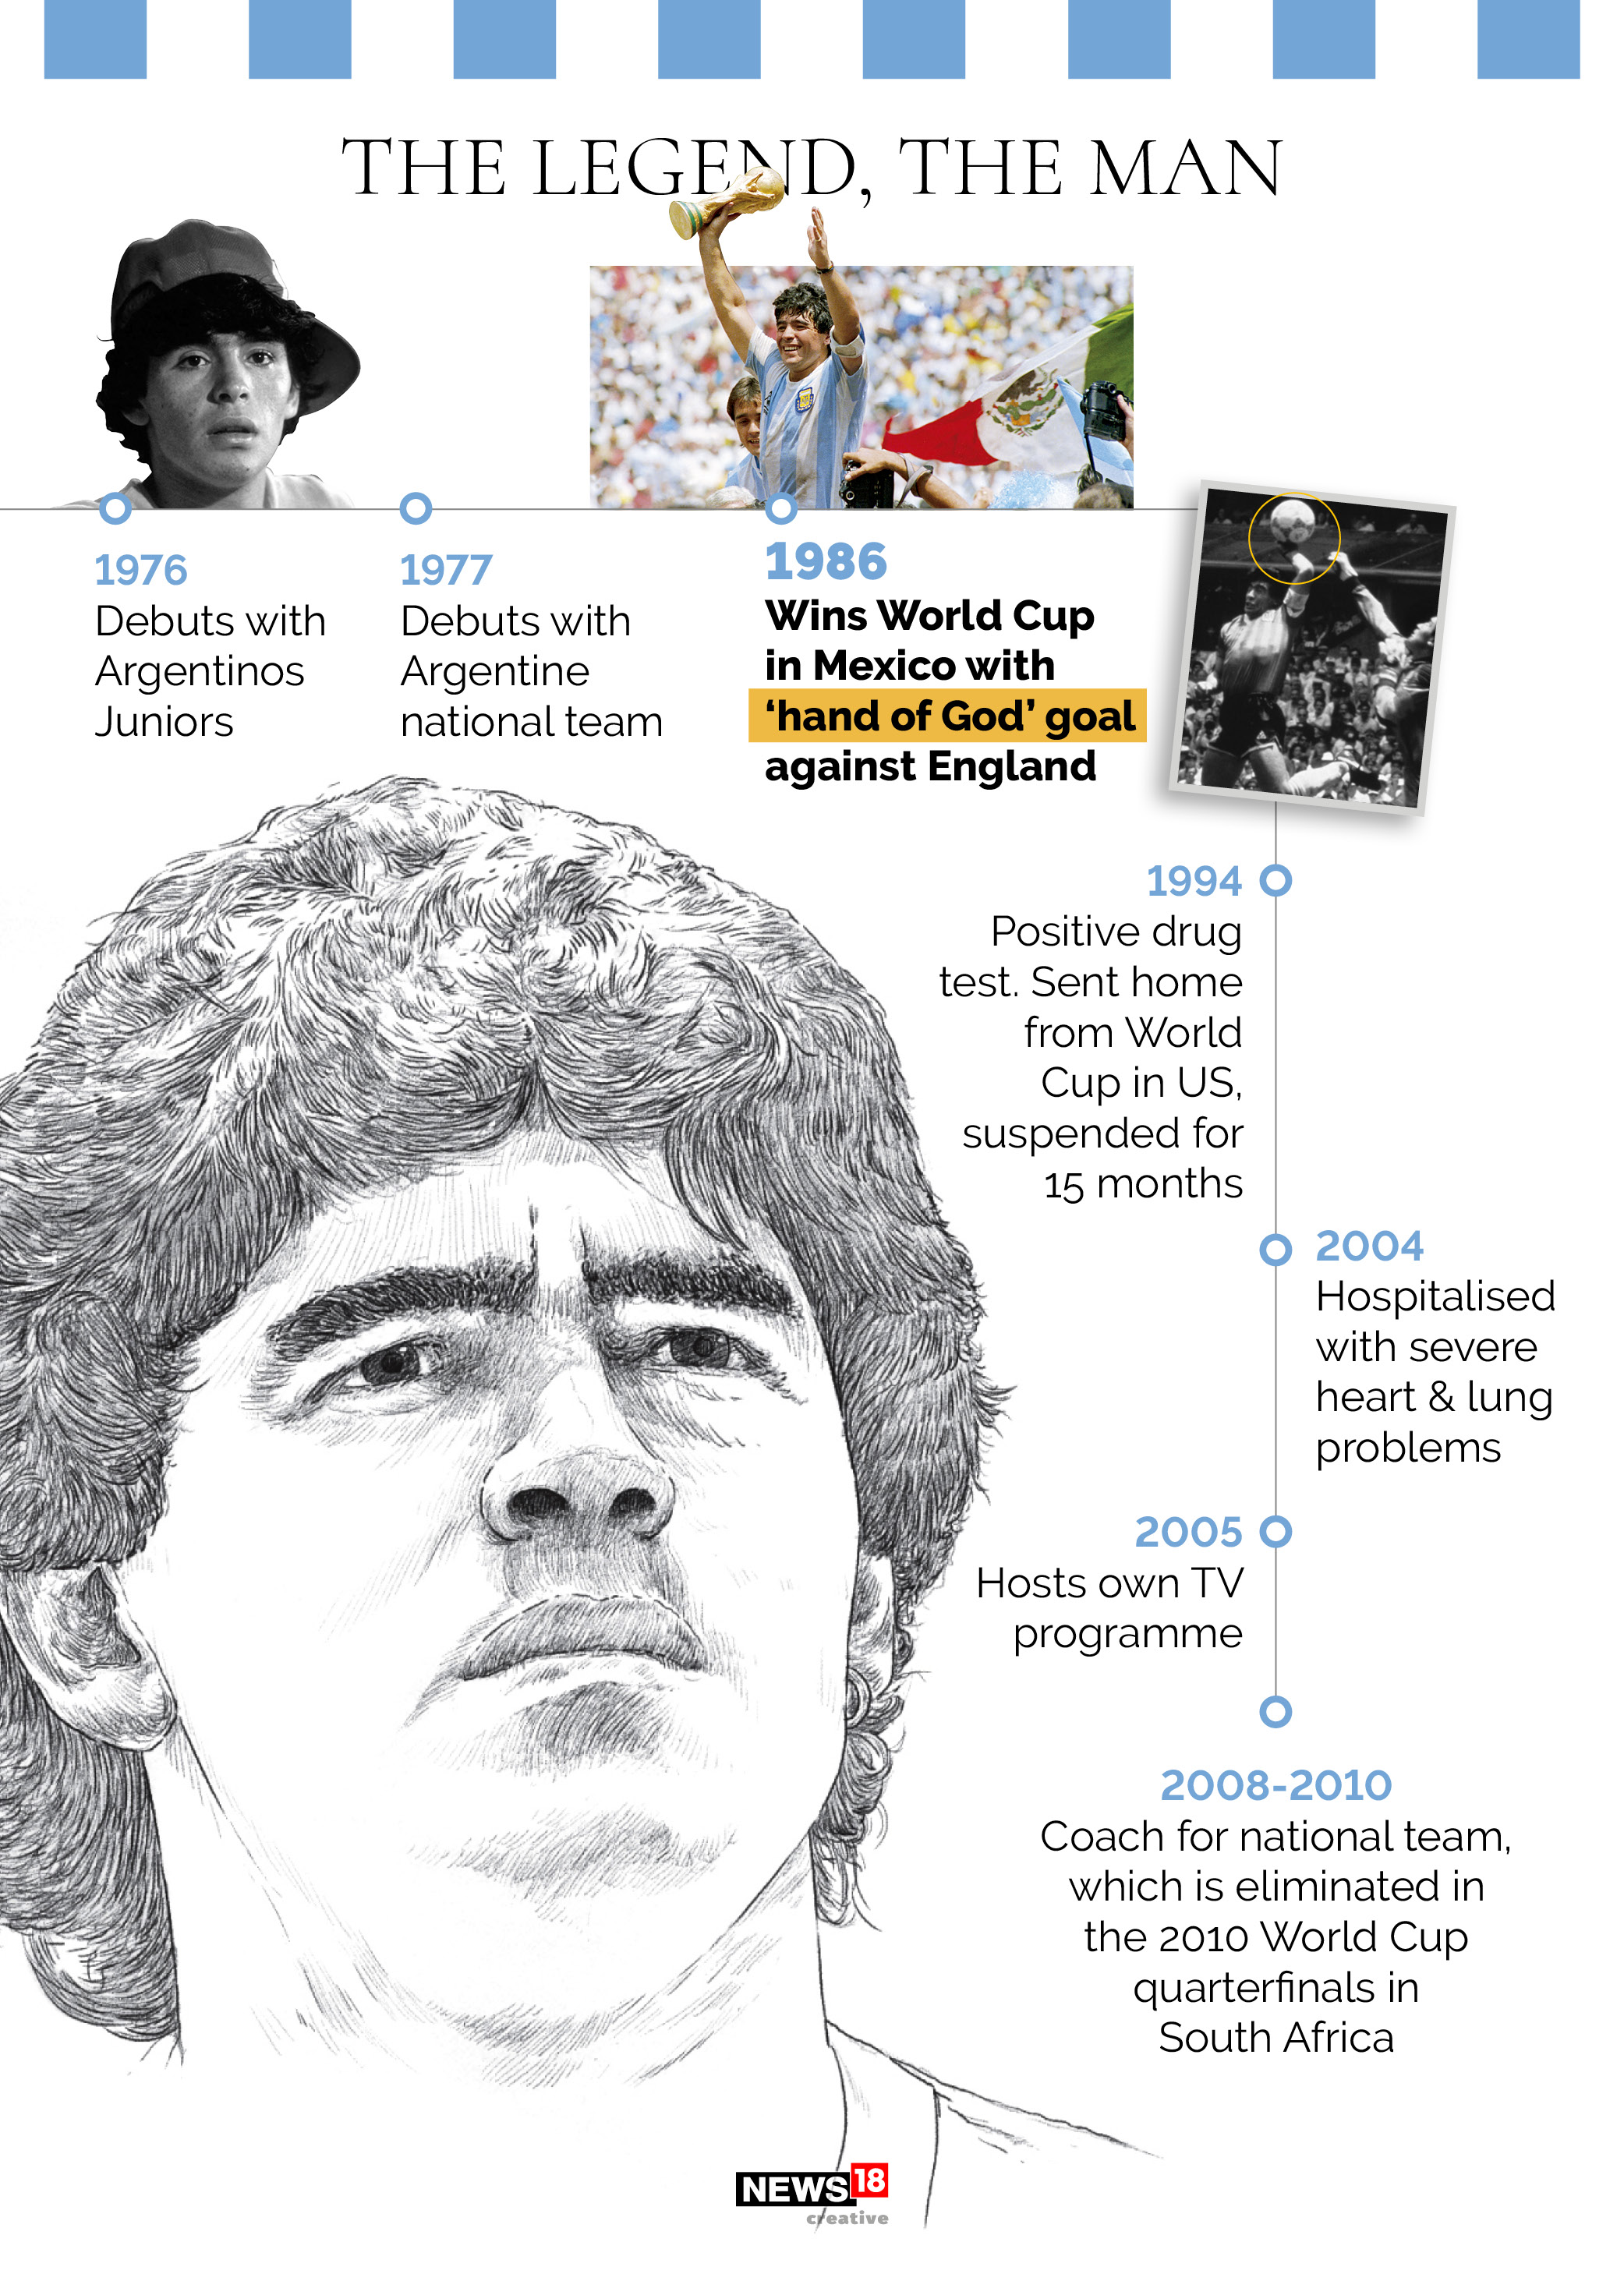 Maradona: The man, the legend